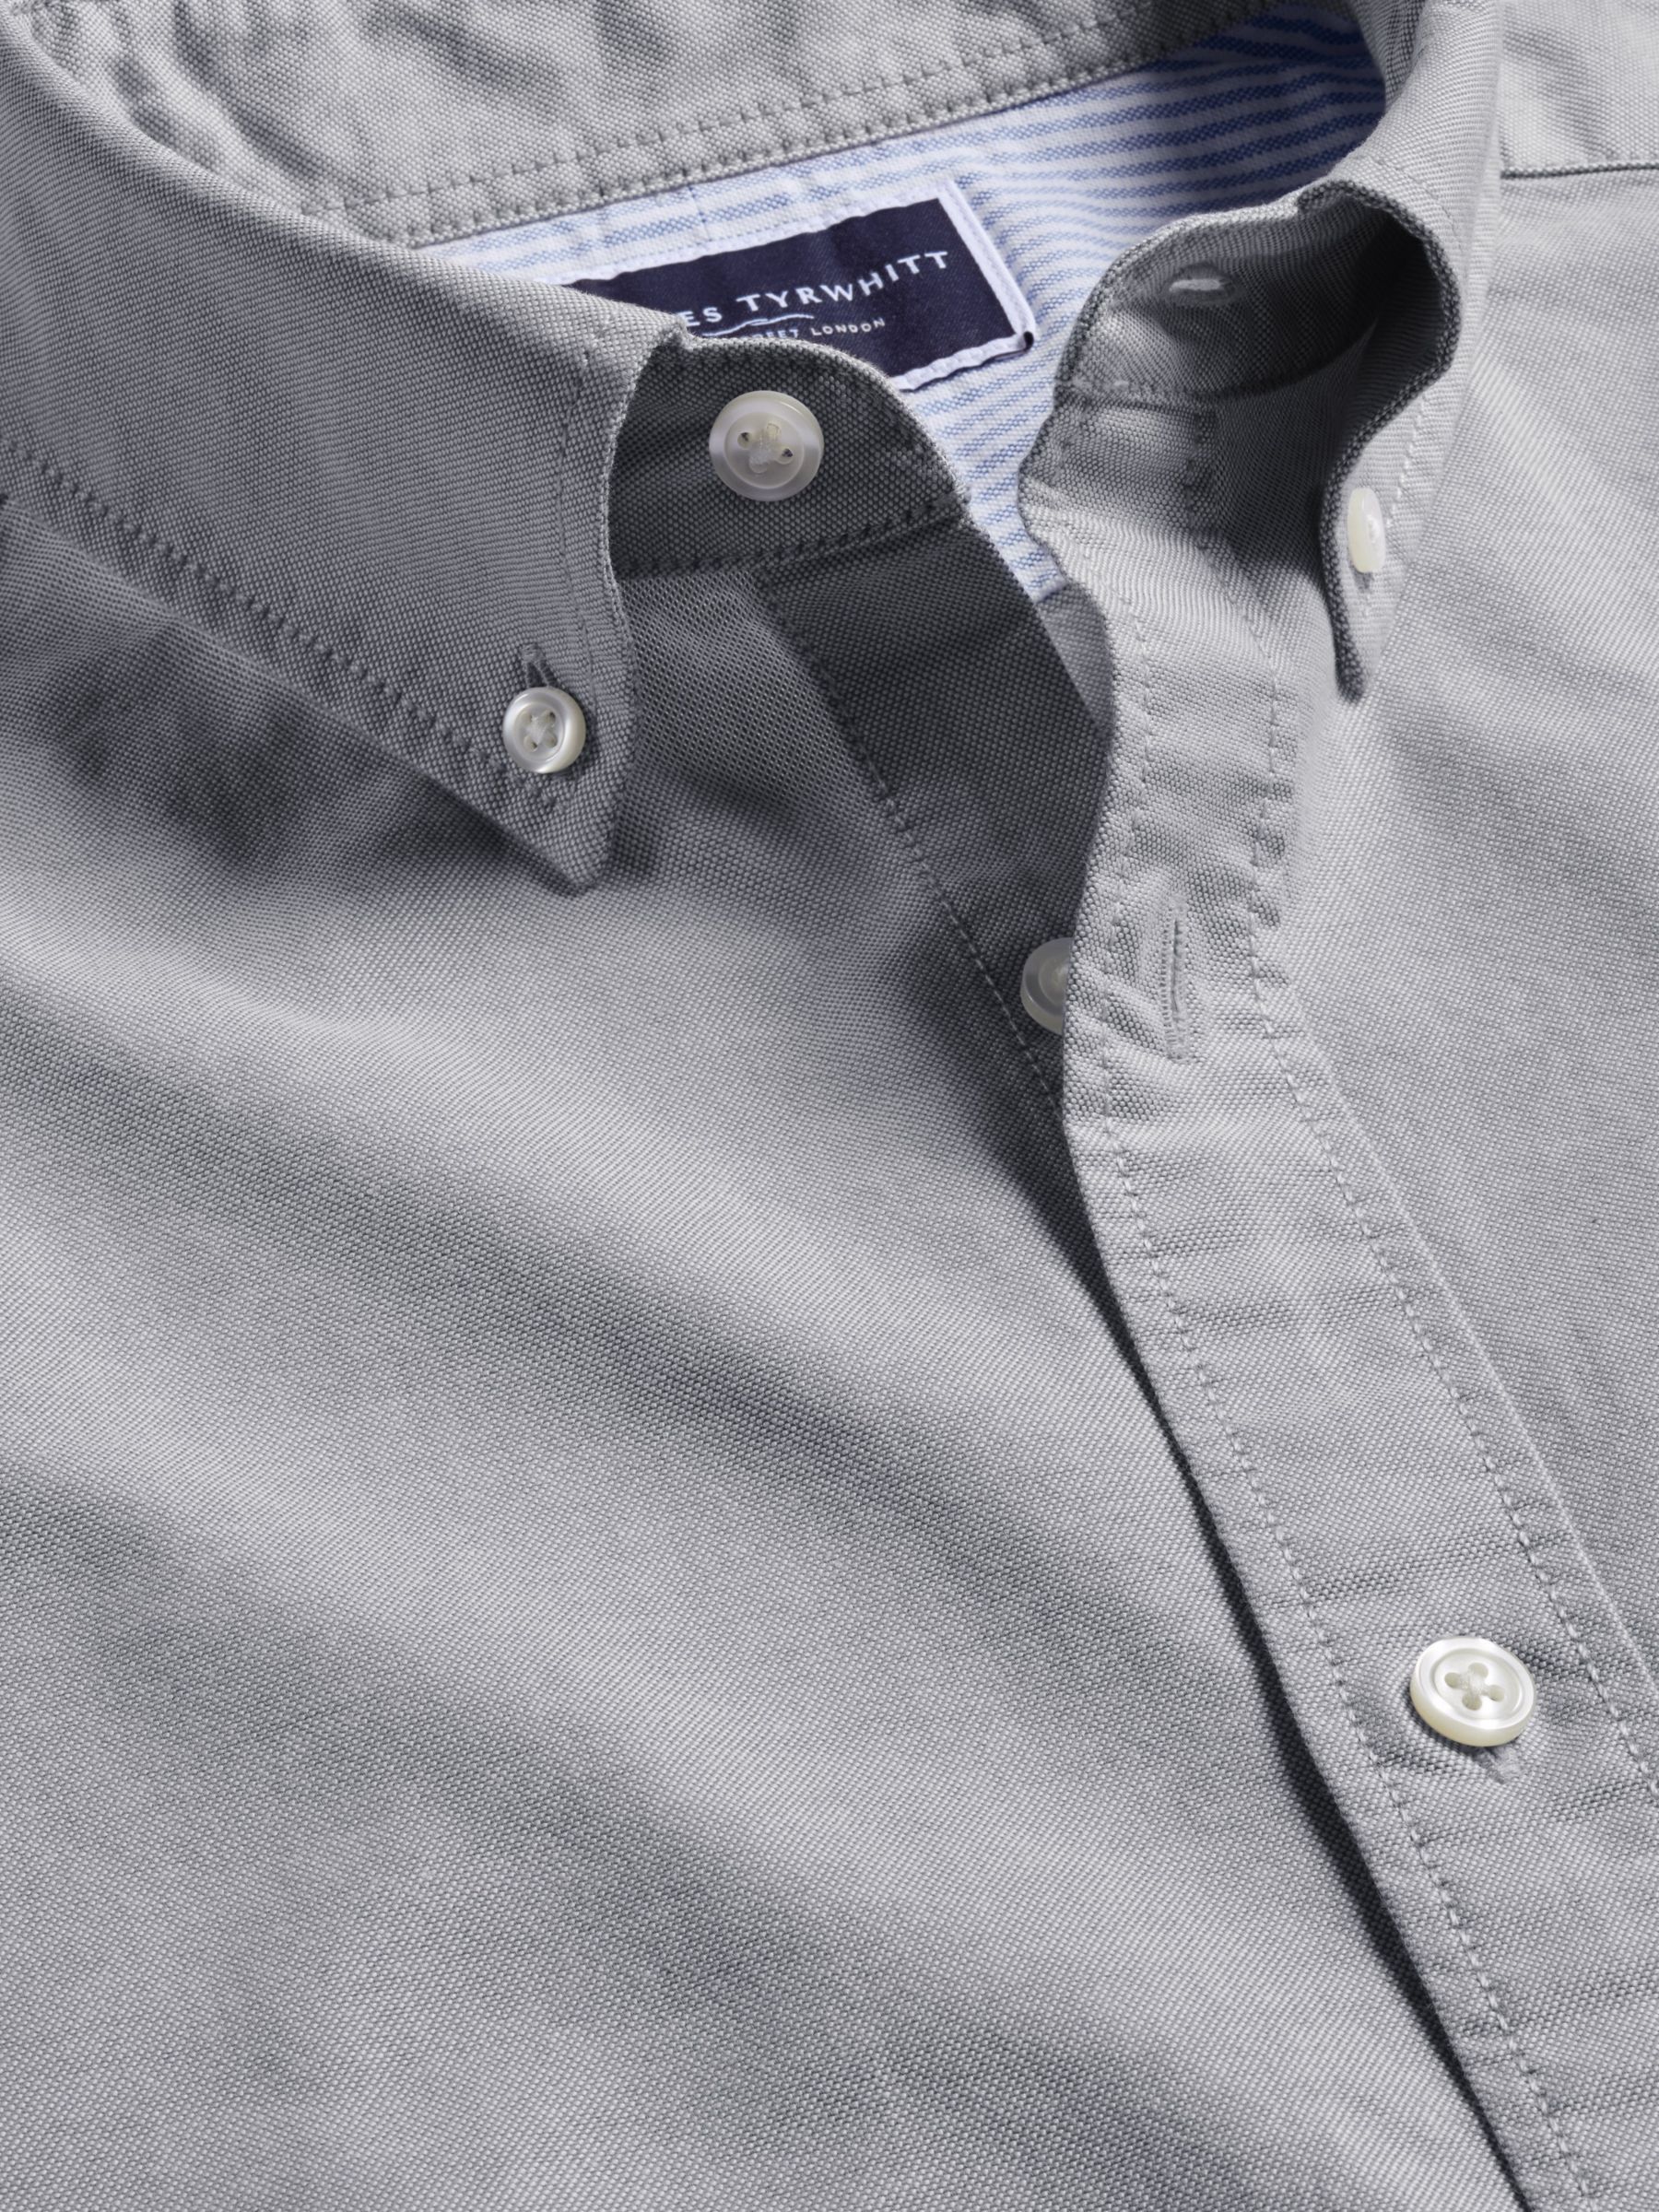 Charles Tyrwhitt Slim Fit Washed Oxford Shirt, Light Grey, L